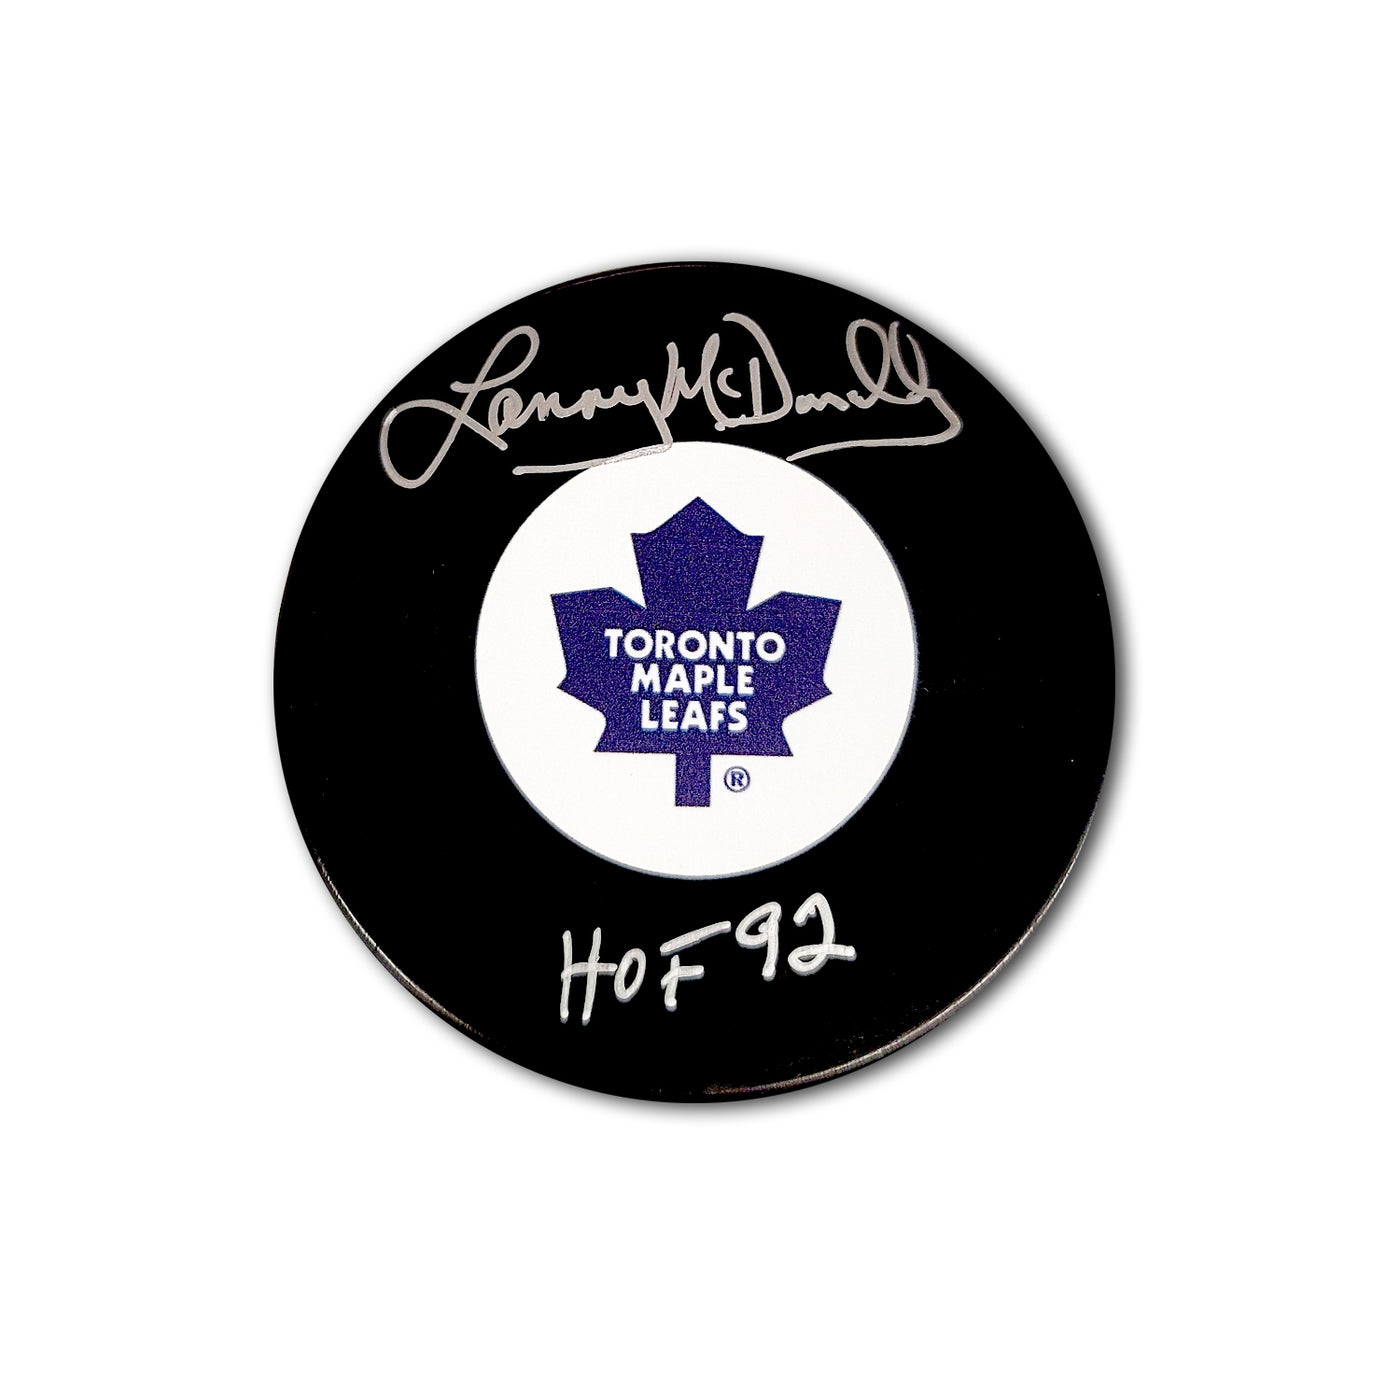 Lanny McDonald Toronto Maple Leafs Autographed Hockey Puck Inscribed HOF 92